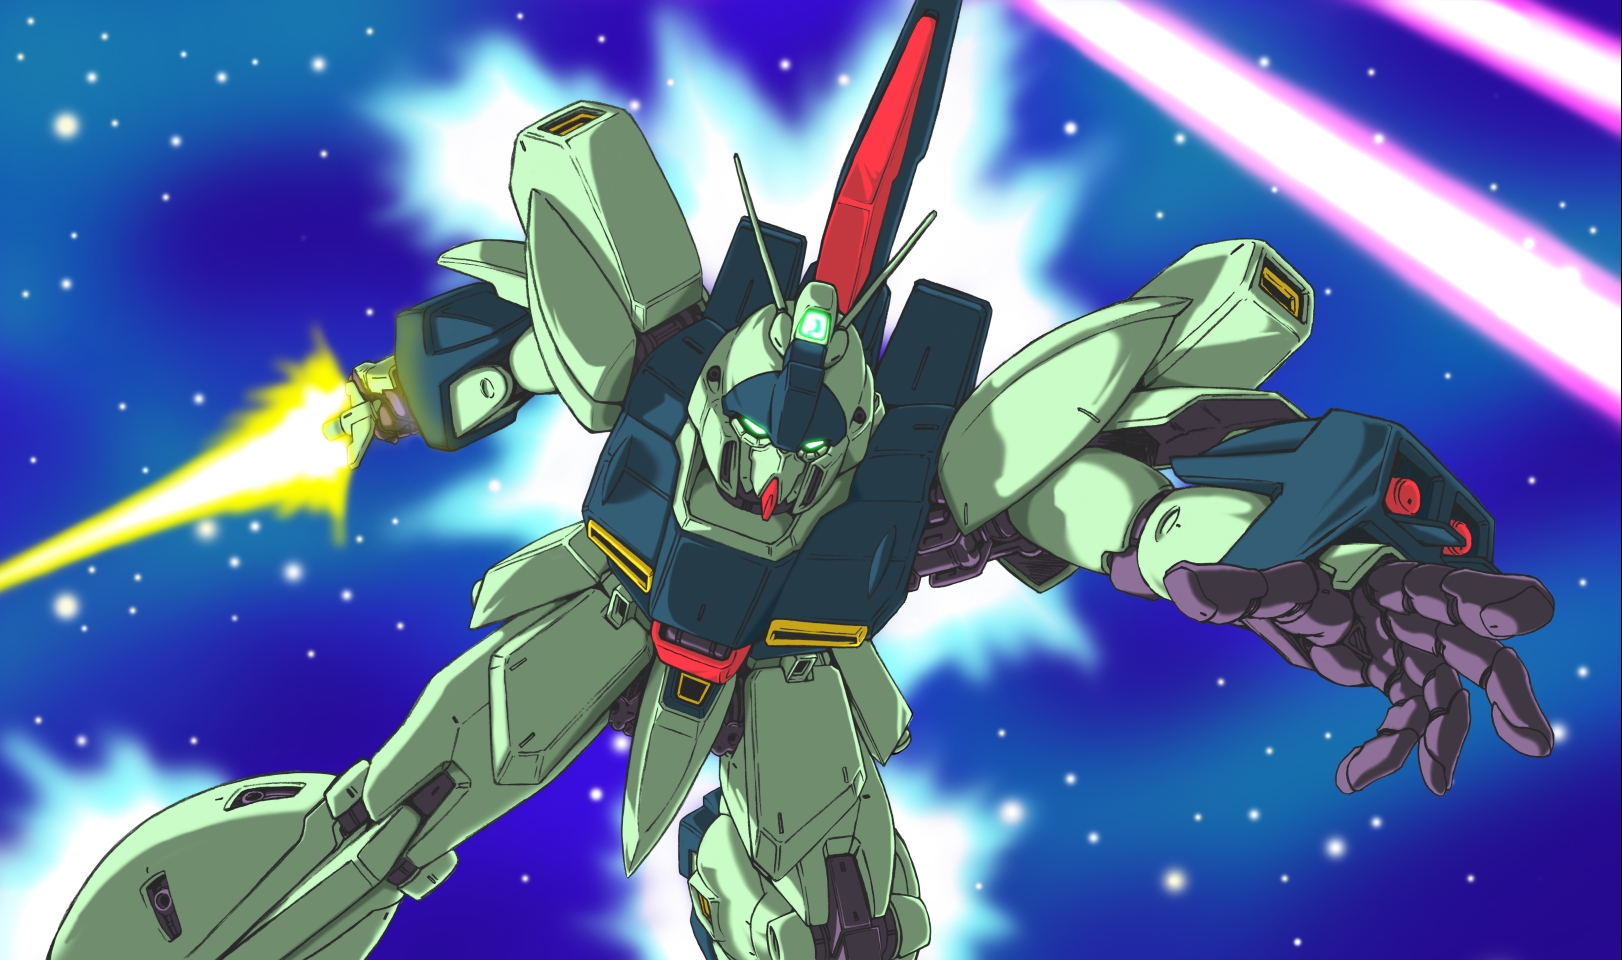 Anime Mechs Super Robot Wars Mobile Suit Gundam Chars Counterattack Re GZ Artwork Digital Art Fan Ar 1622x960